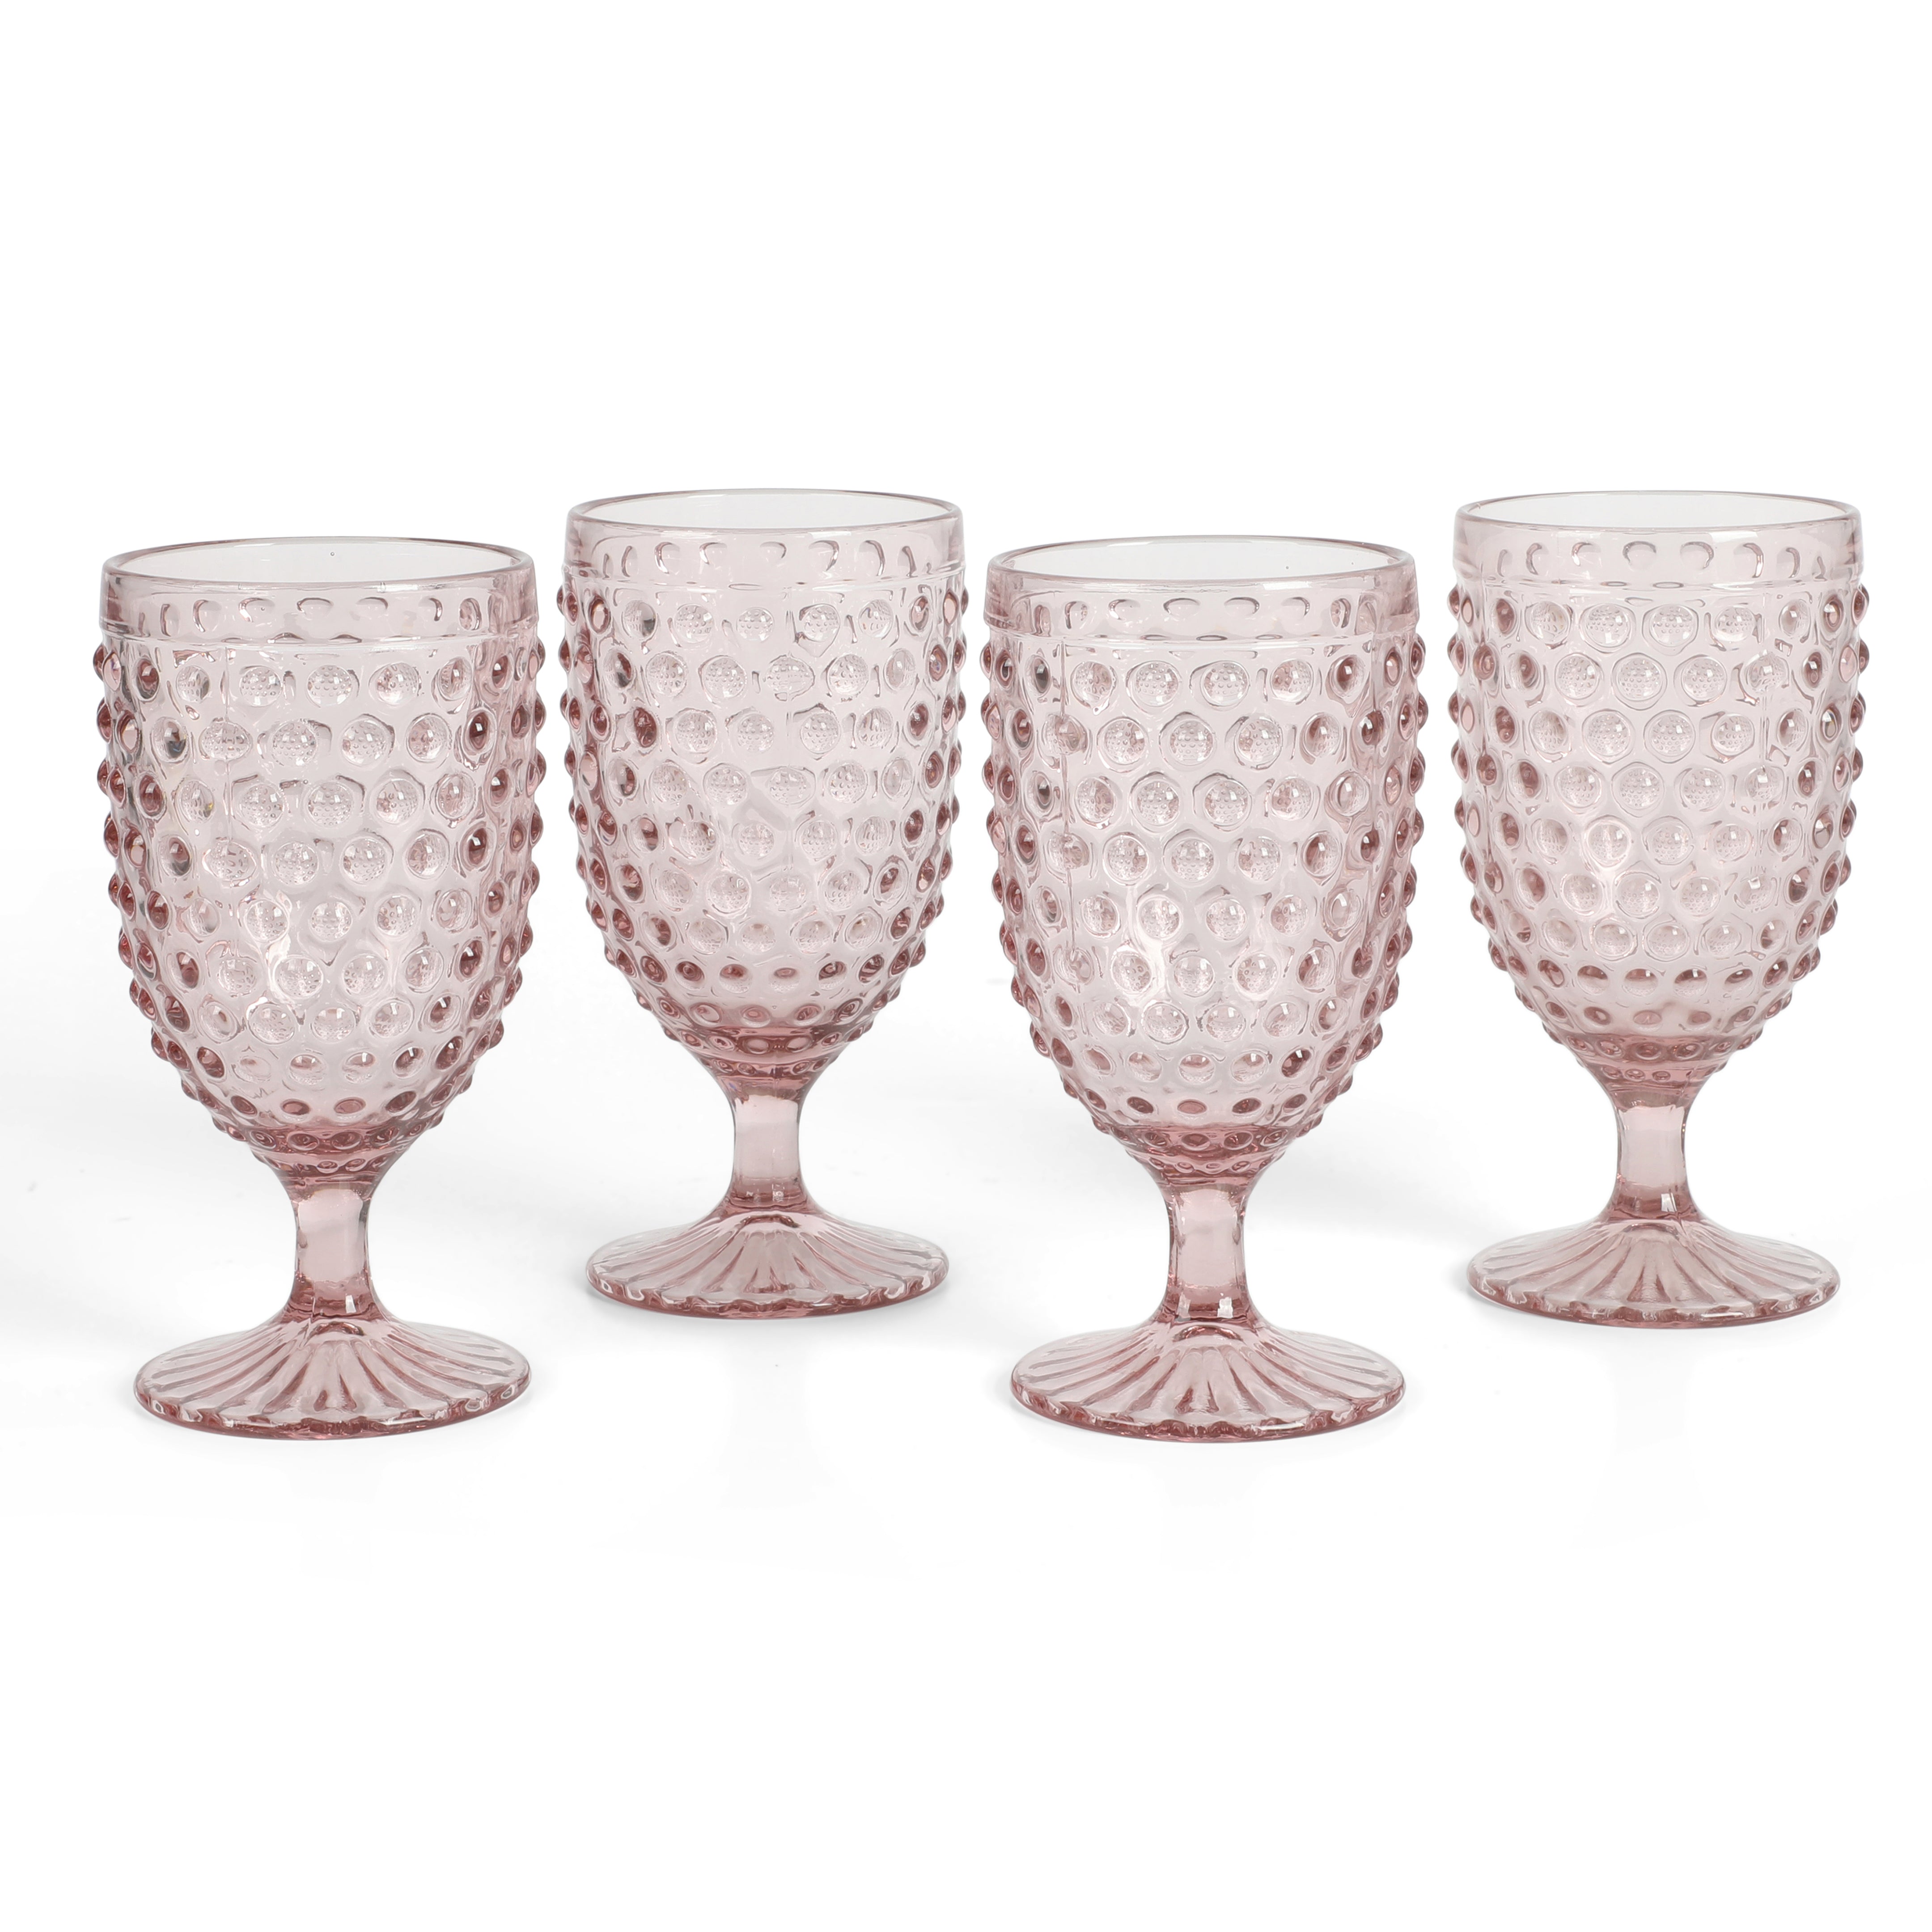 Martha Stewart Chauncey 4-Pack 14.2 oz Hobnail Handmade Glass Goblet